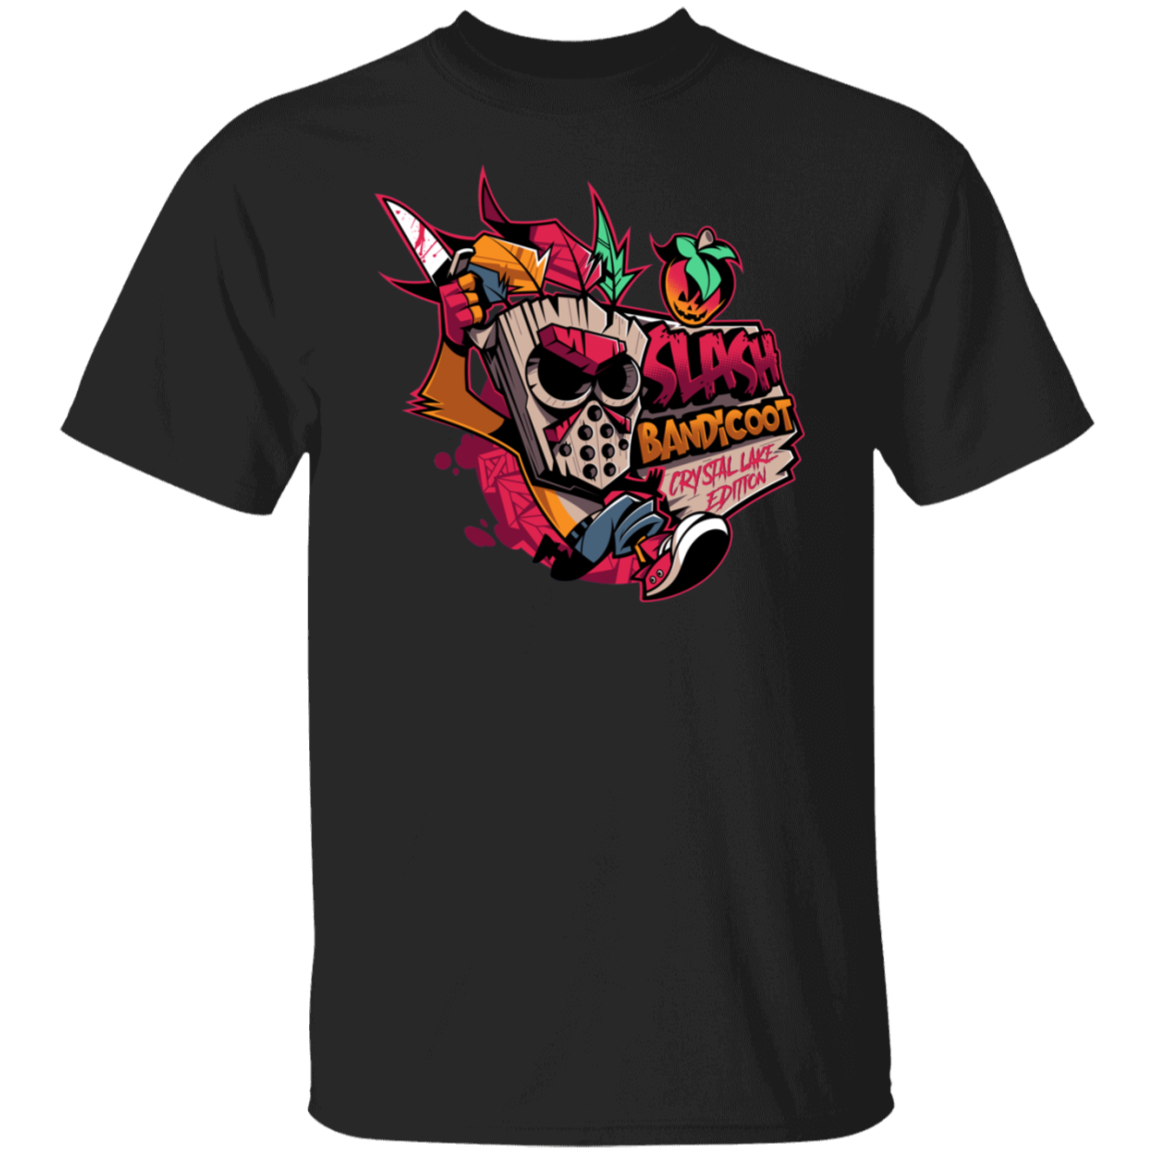 Slash Bandicoot T-Shirt